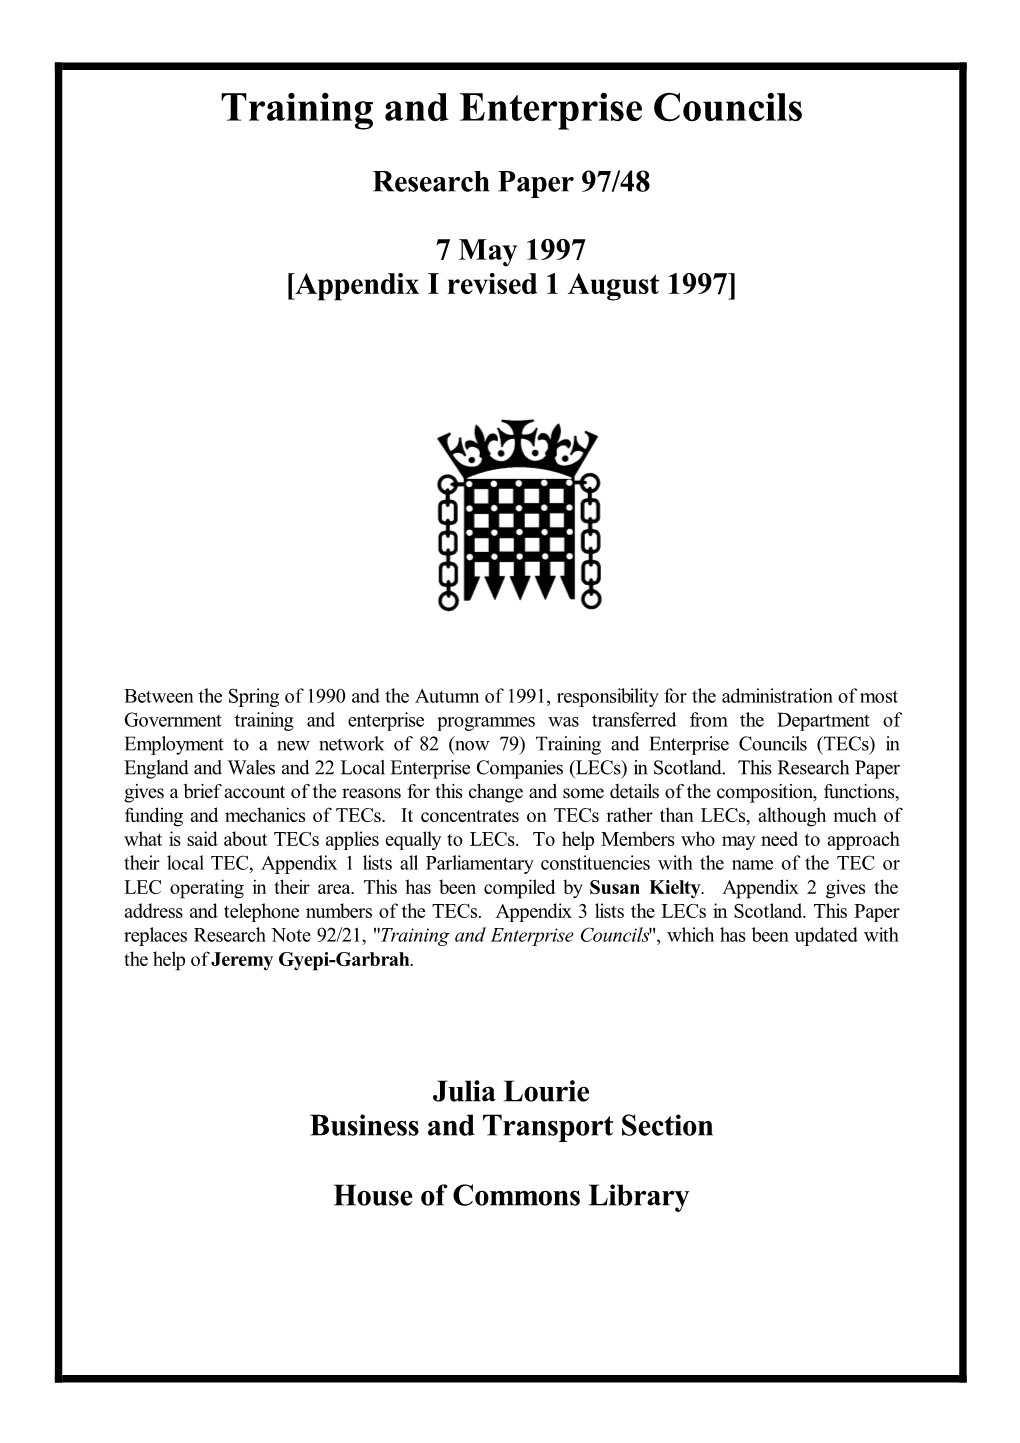 Training and Enterprise Councils [Appendix I Revised 1 August 1997]